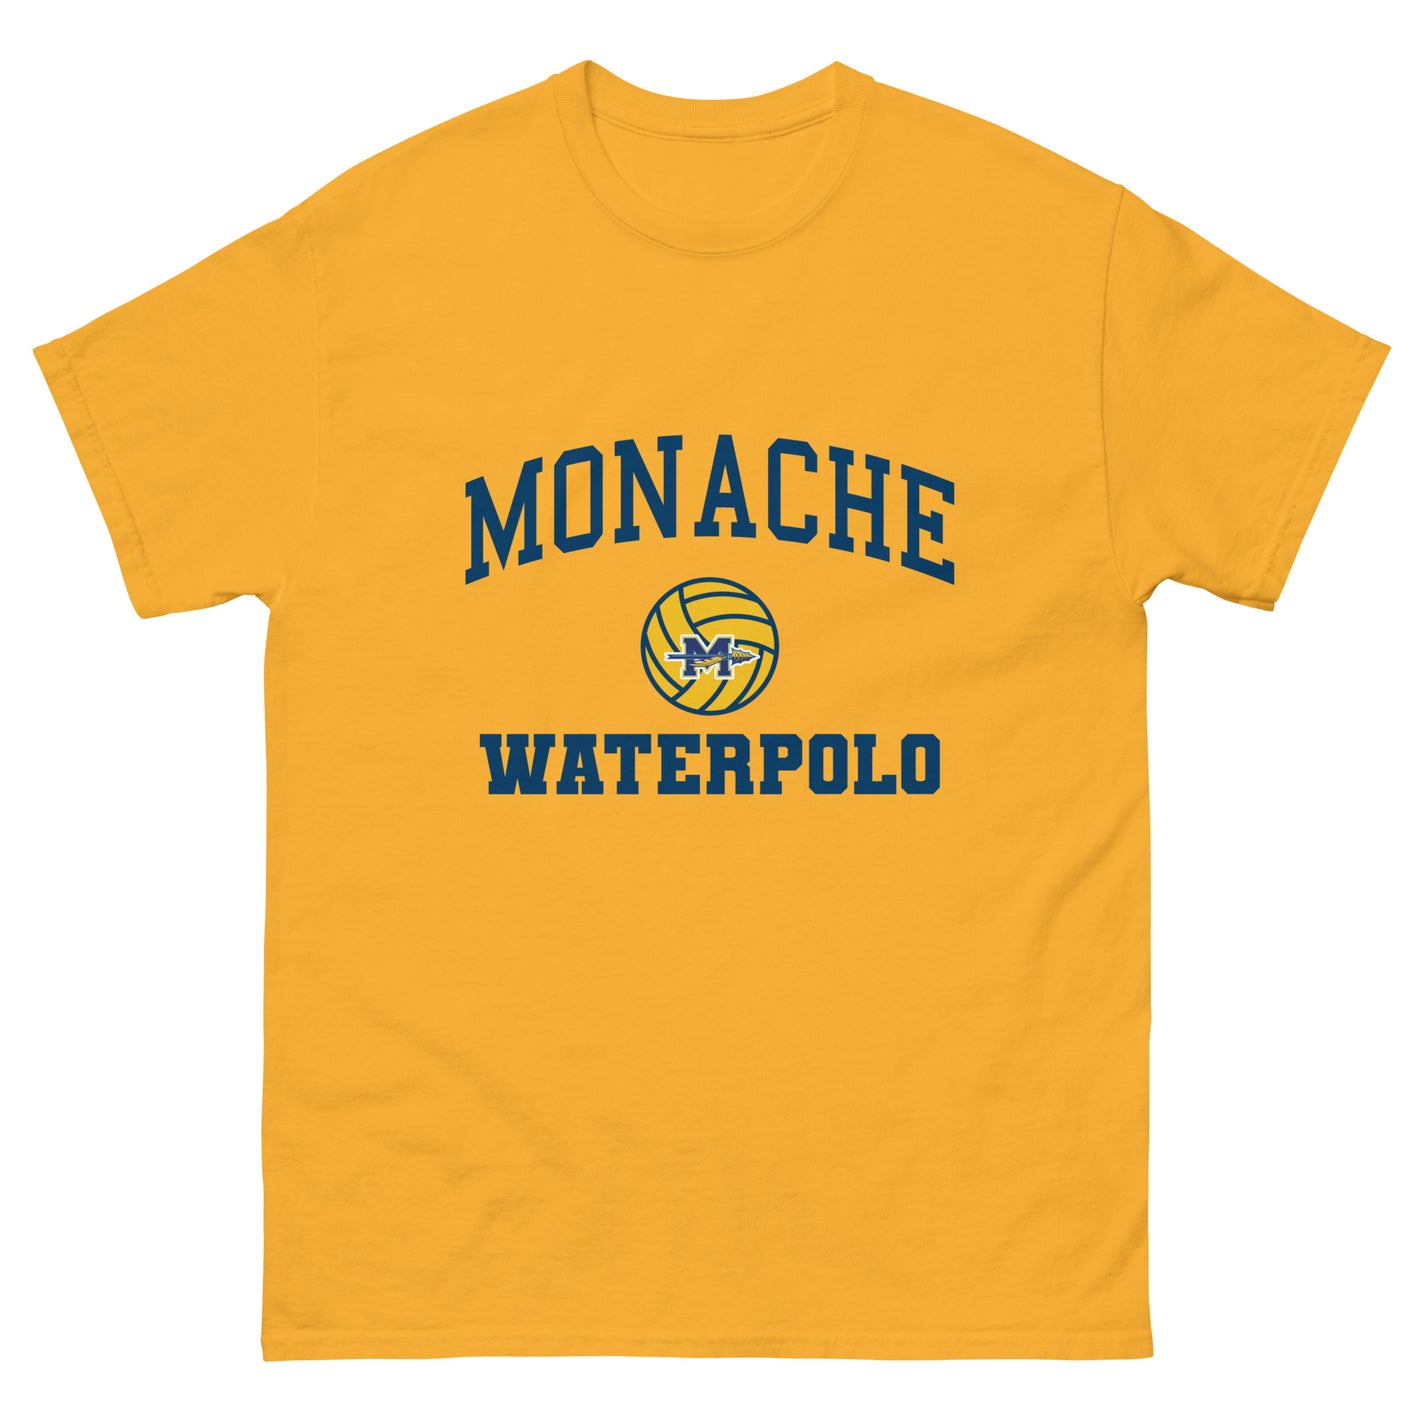 Monache Waterpolo classic tee